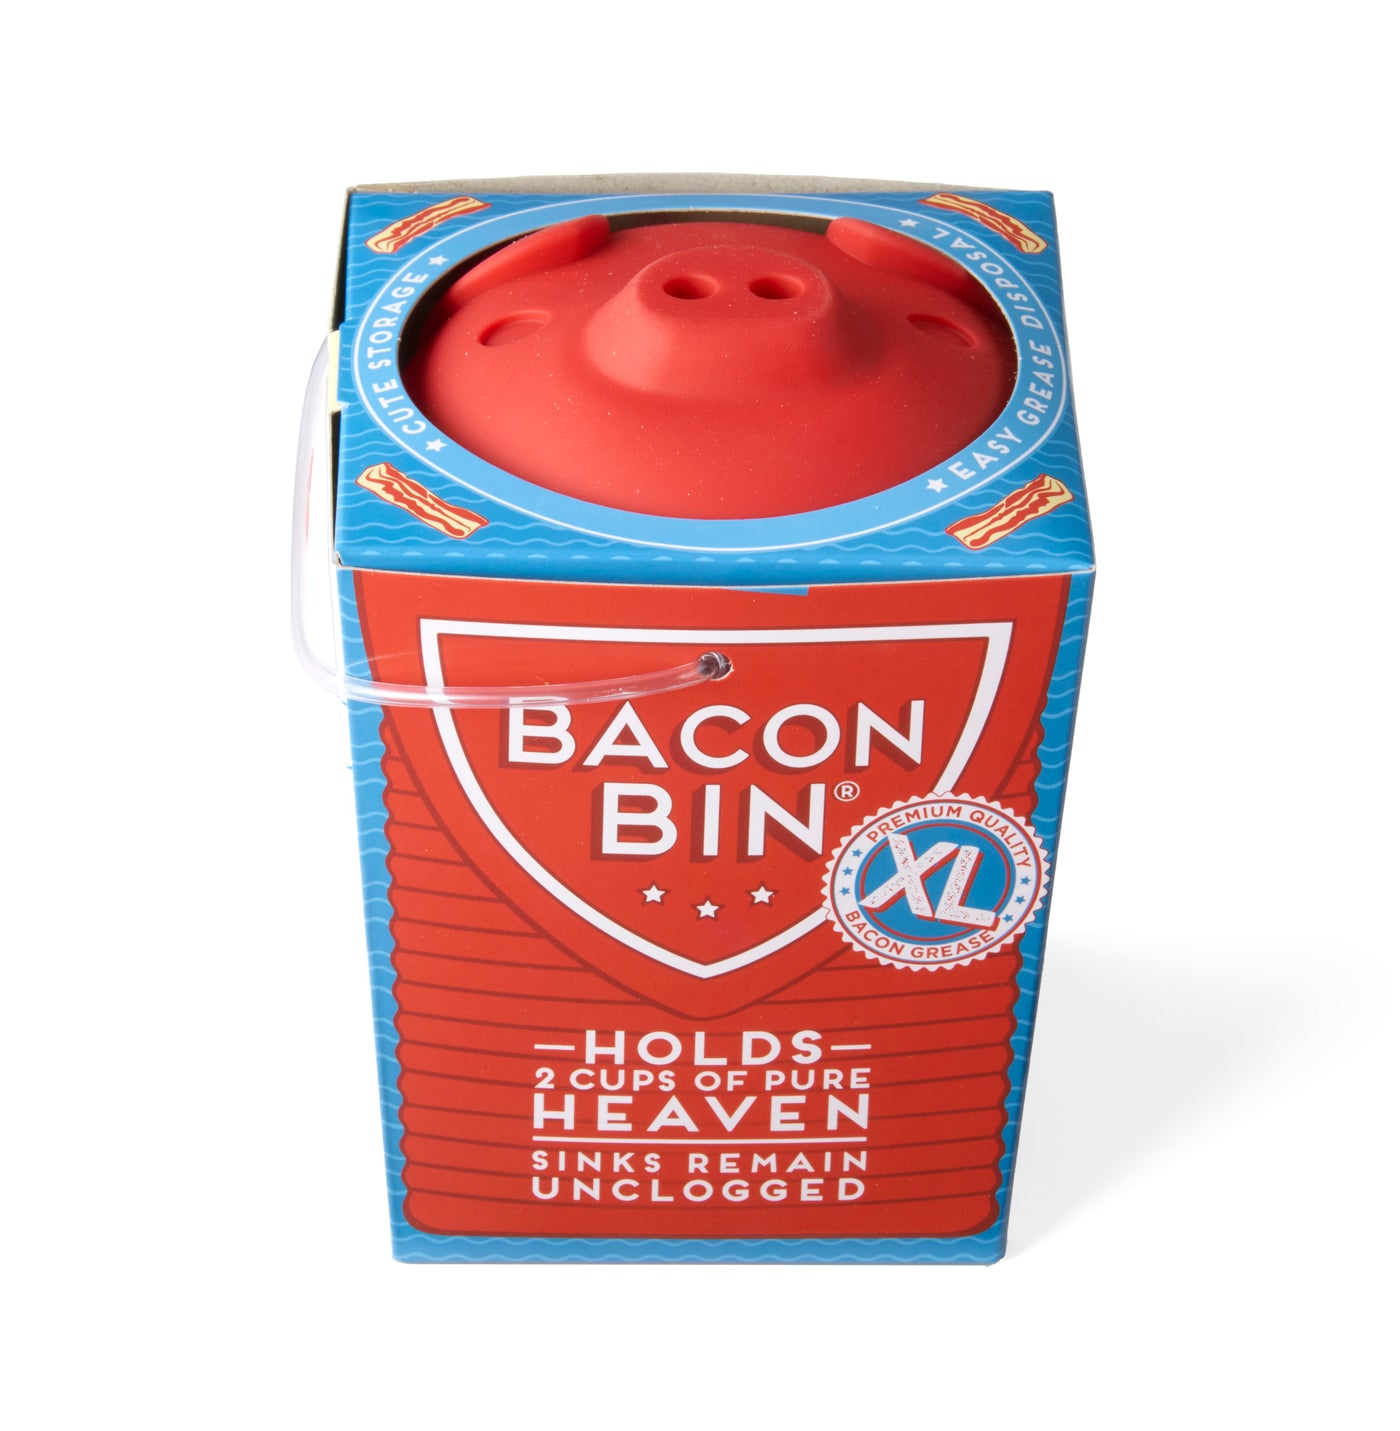 Metal Bacon Bin - Grease Holder – Talisman Designs